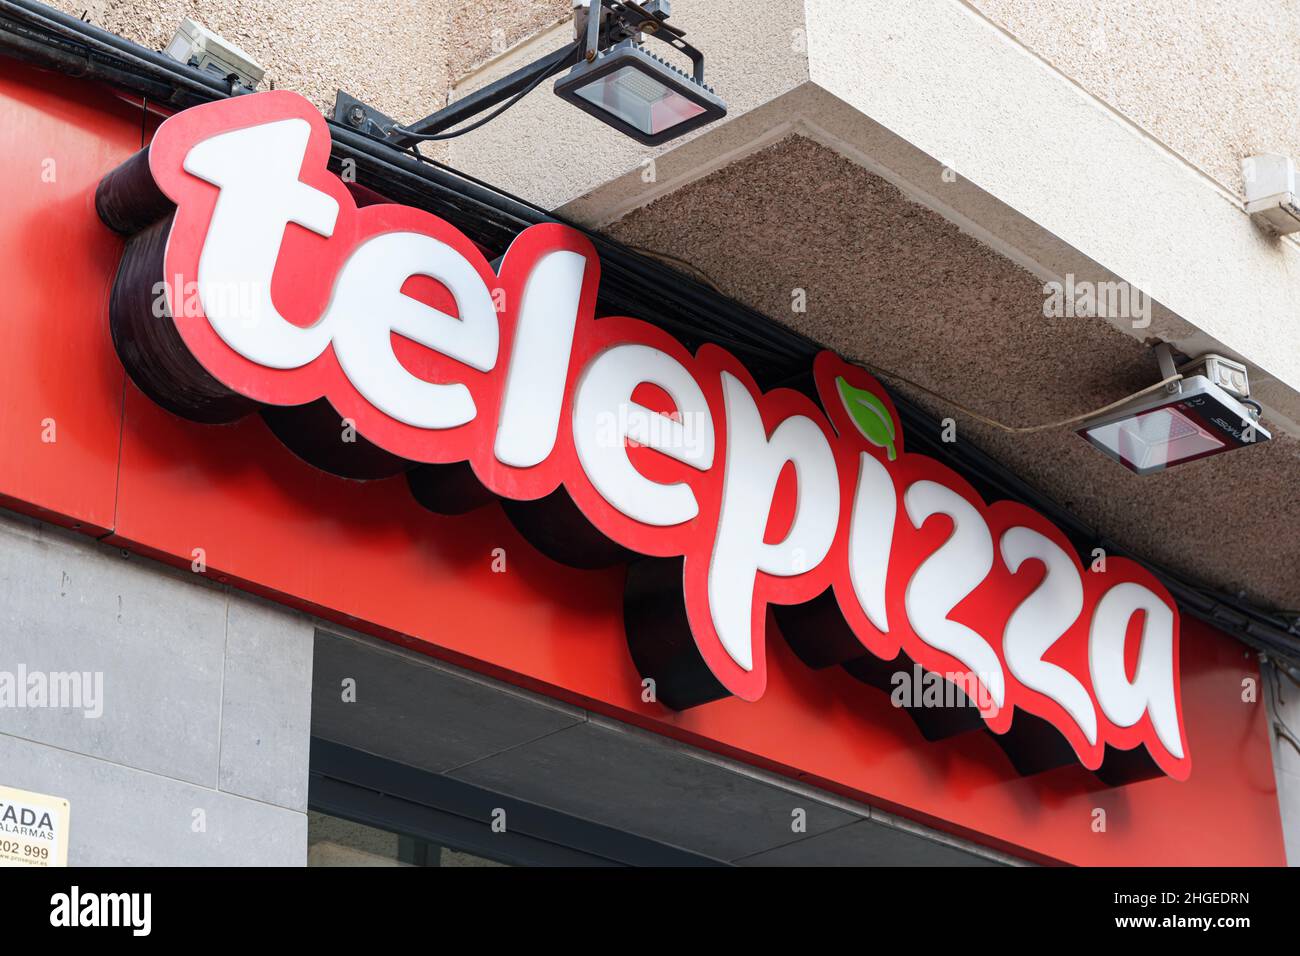 VALENCIA, SPAIN - JANUARY 13, 2022: Telepizza is a Spanish multinational pizza restaurant chain Stock Photo